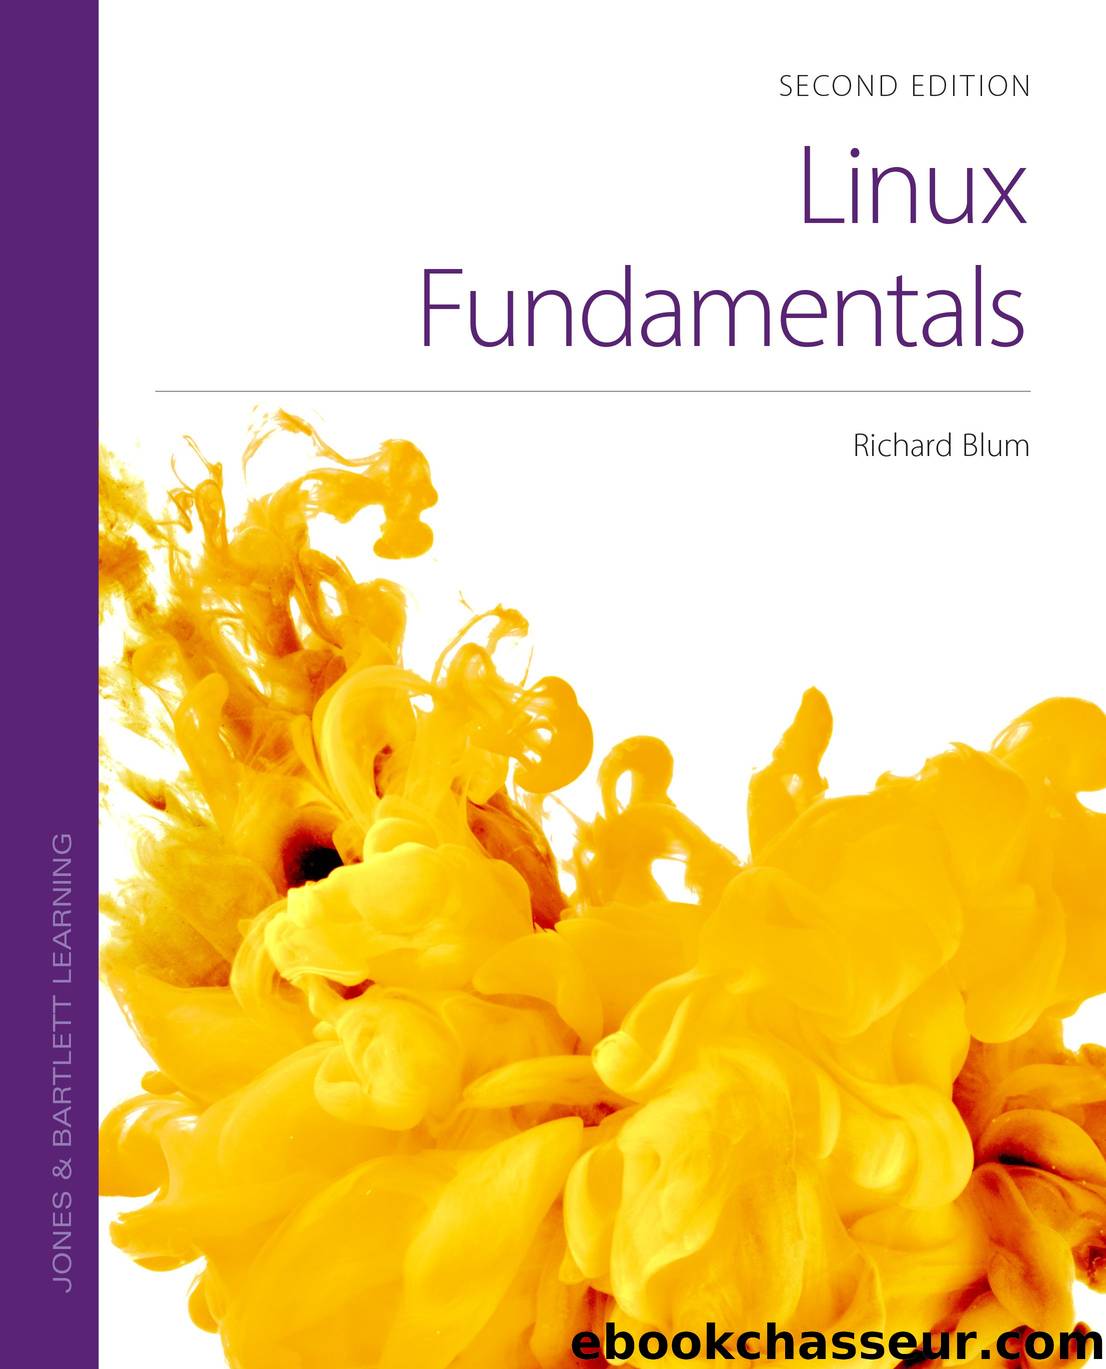 Linux Fundamentals, Second Edition by Richard Blum